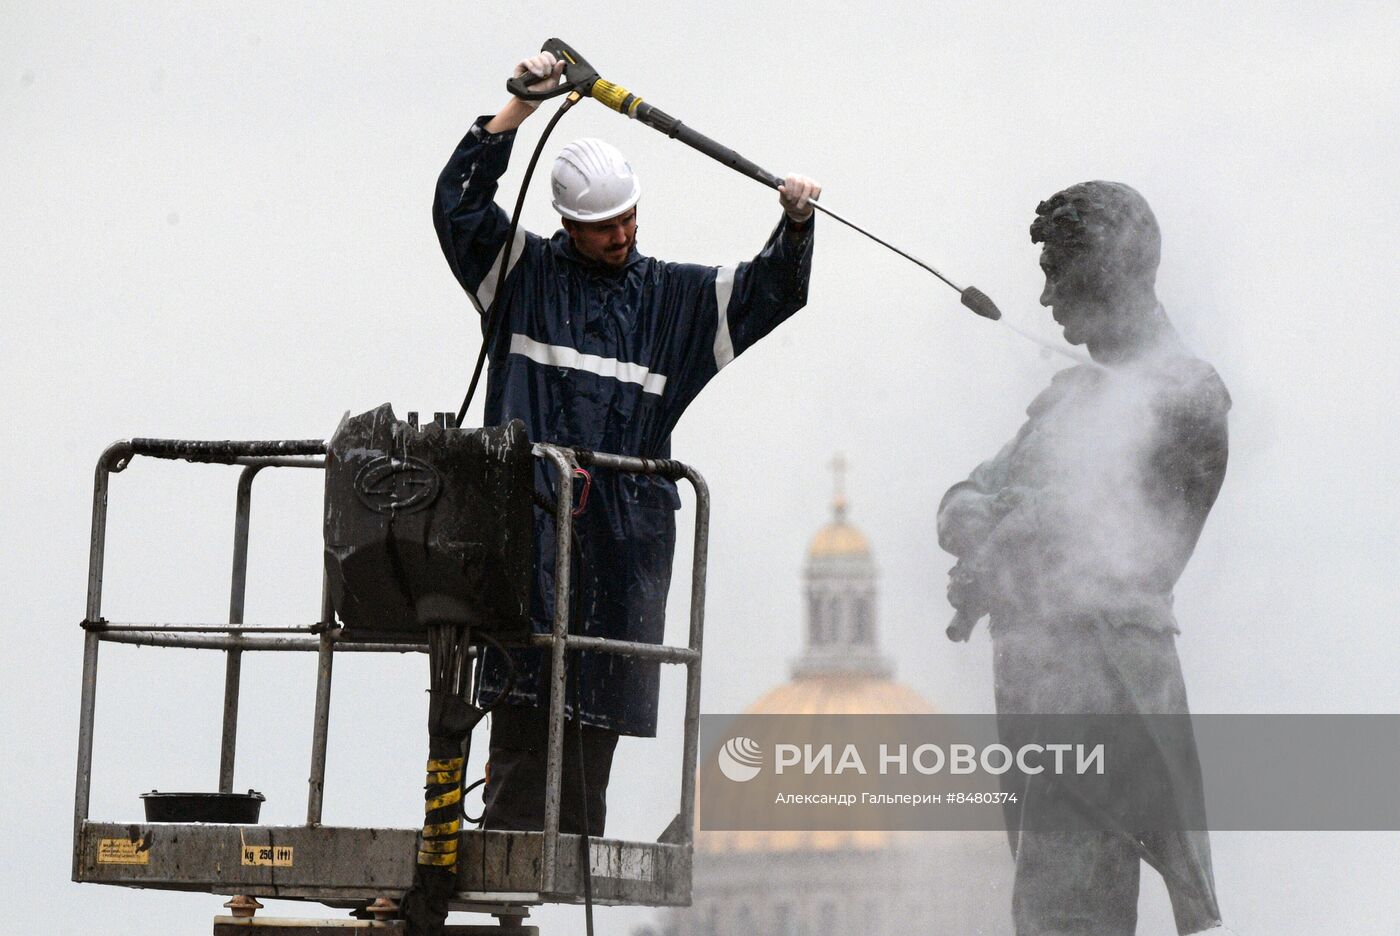 Помывка памятника Крузенштерну в Петербурге